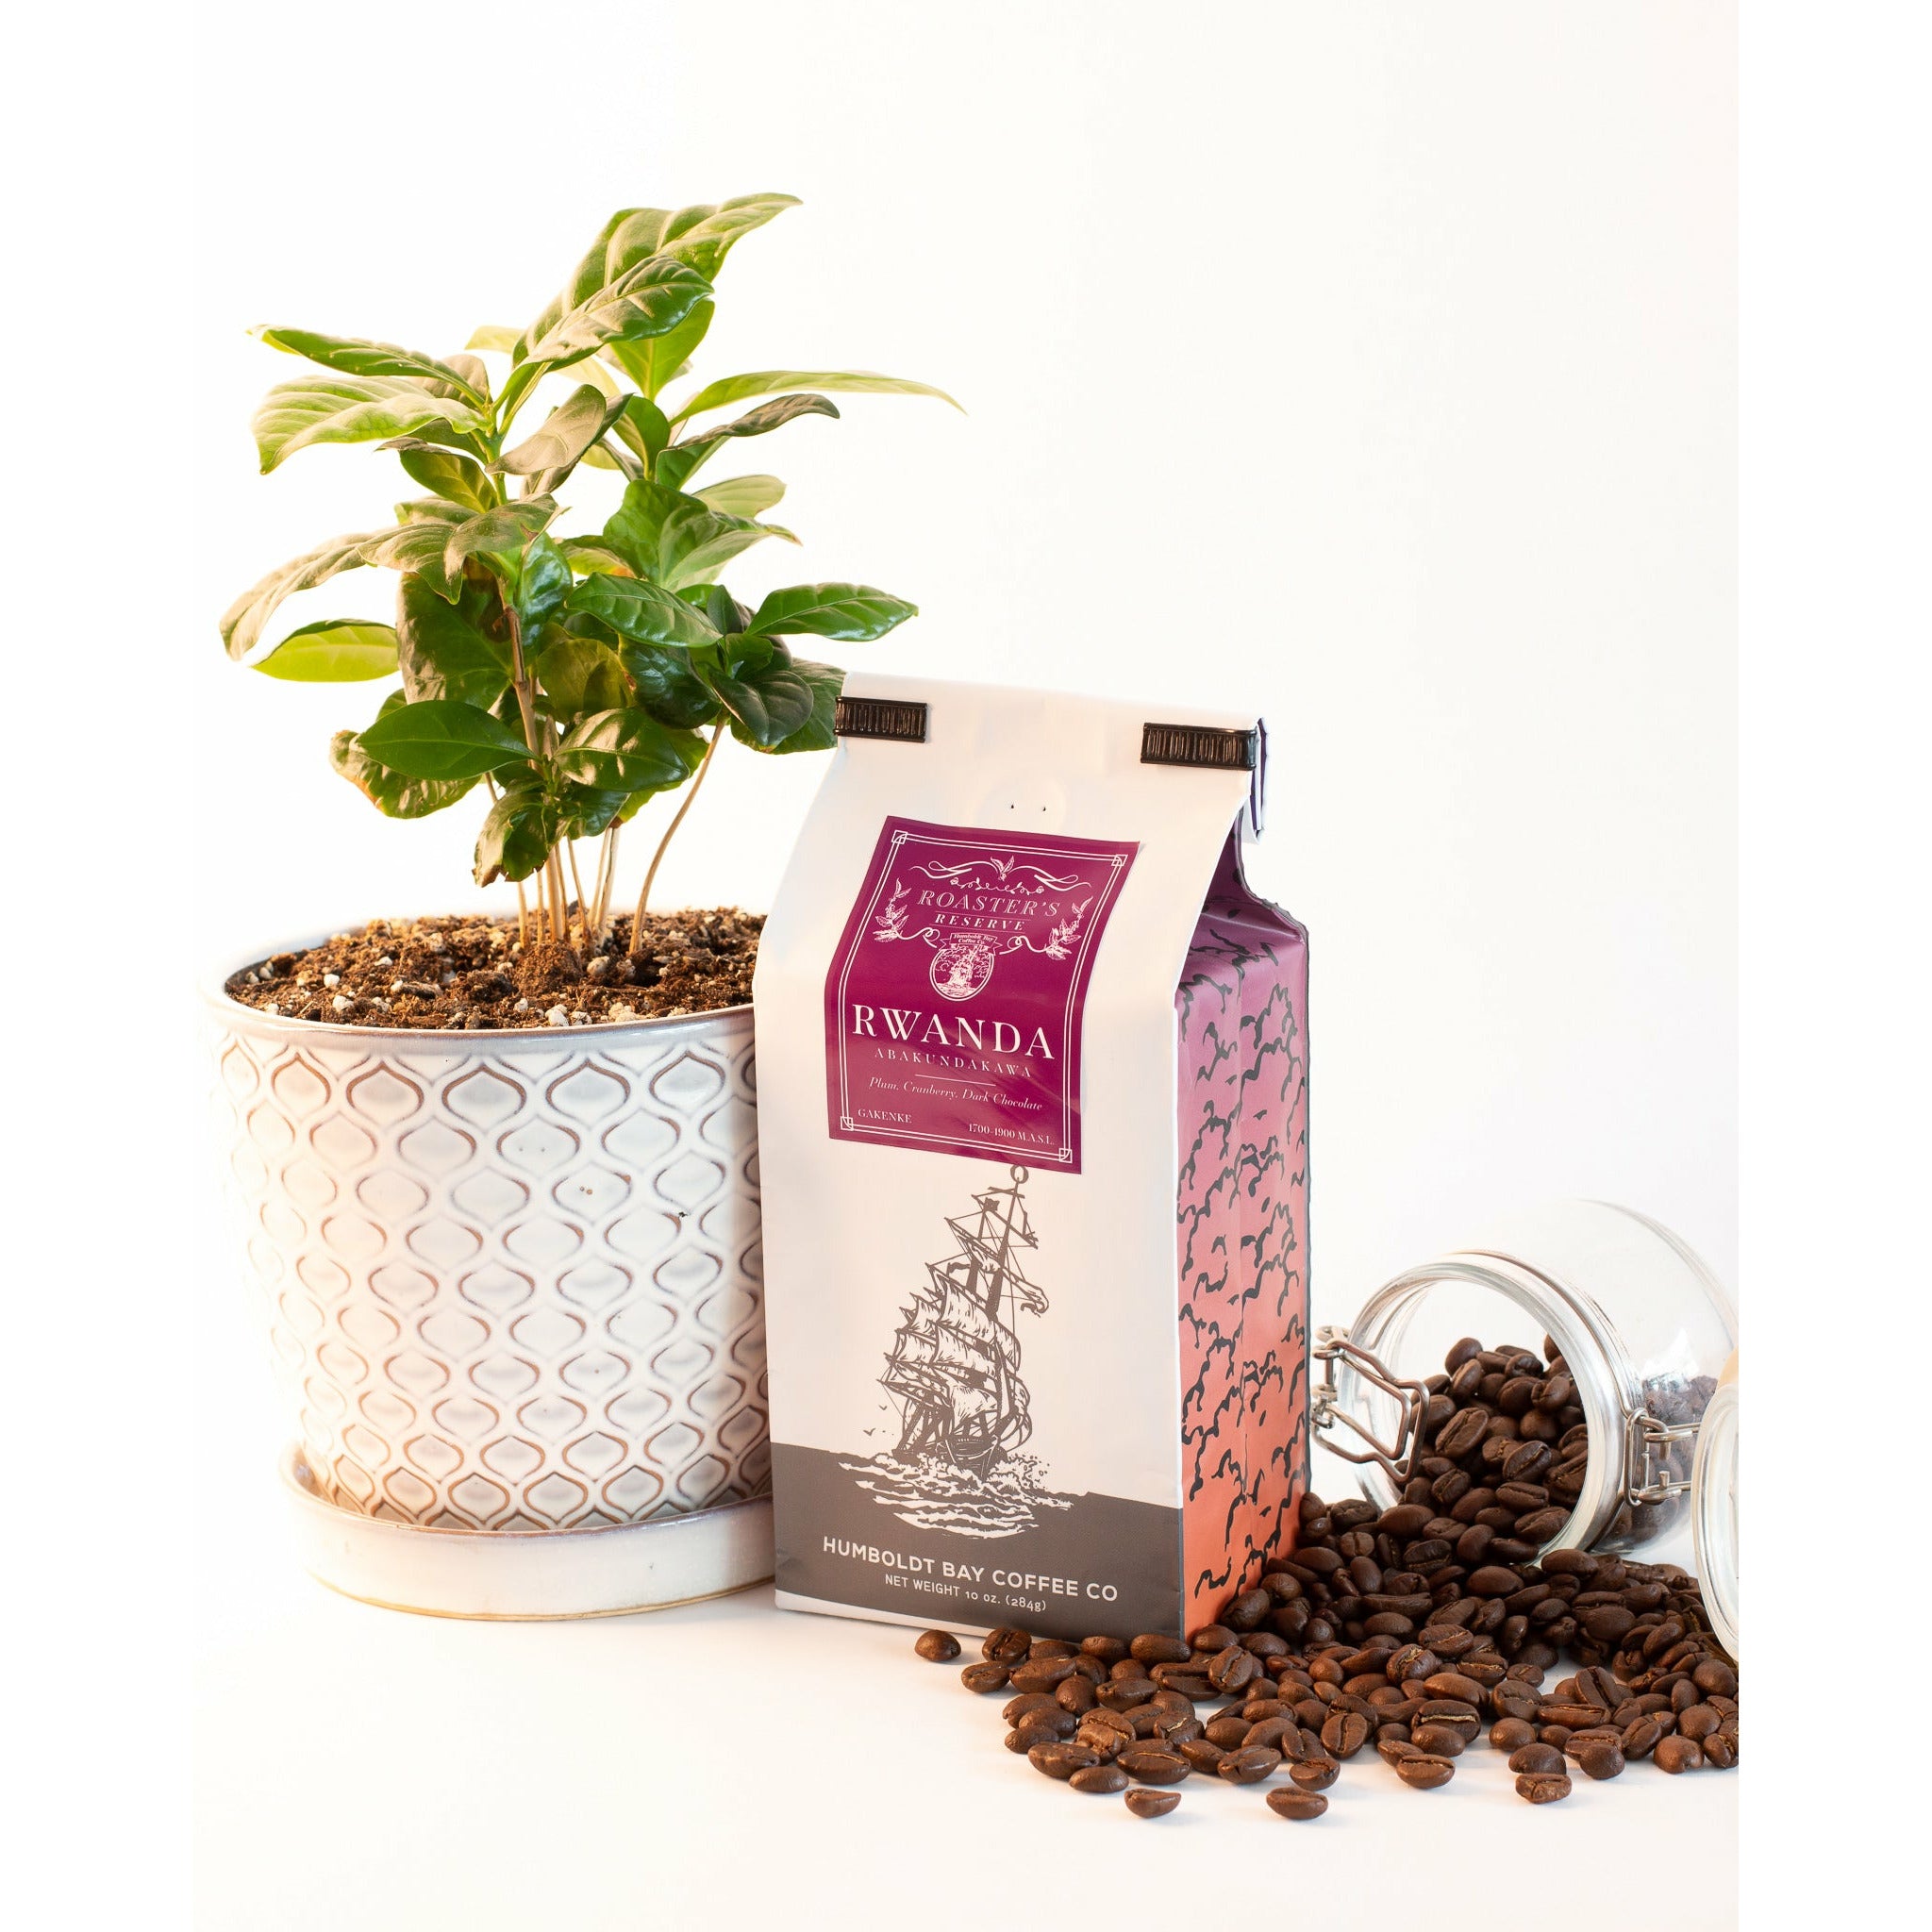 Roaster's Reserve single origin Rwanda coffee